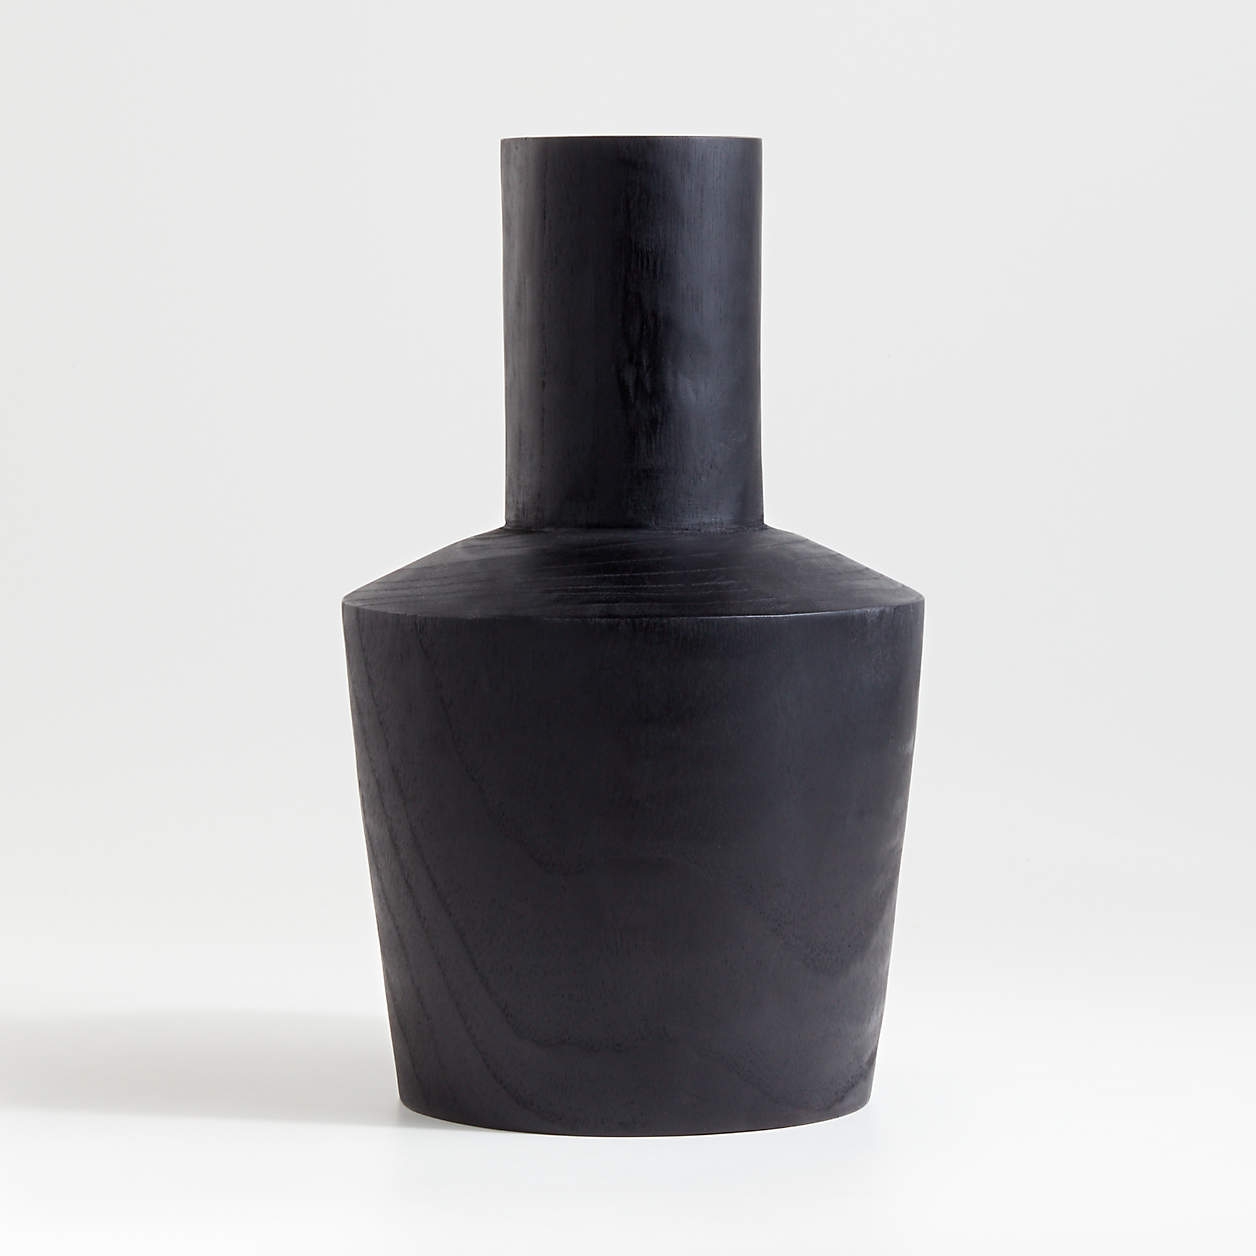 Arllon Wood Vase, Black, Large - Image 0